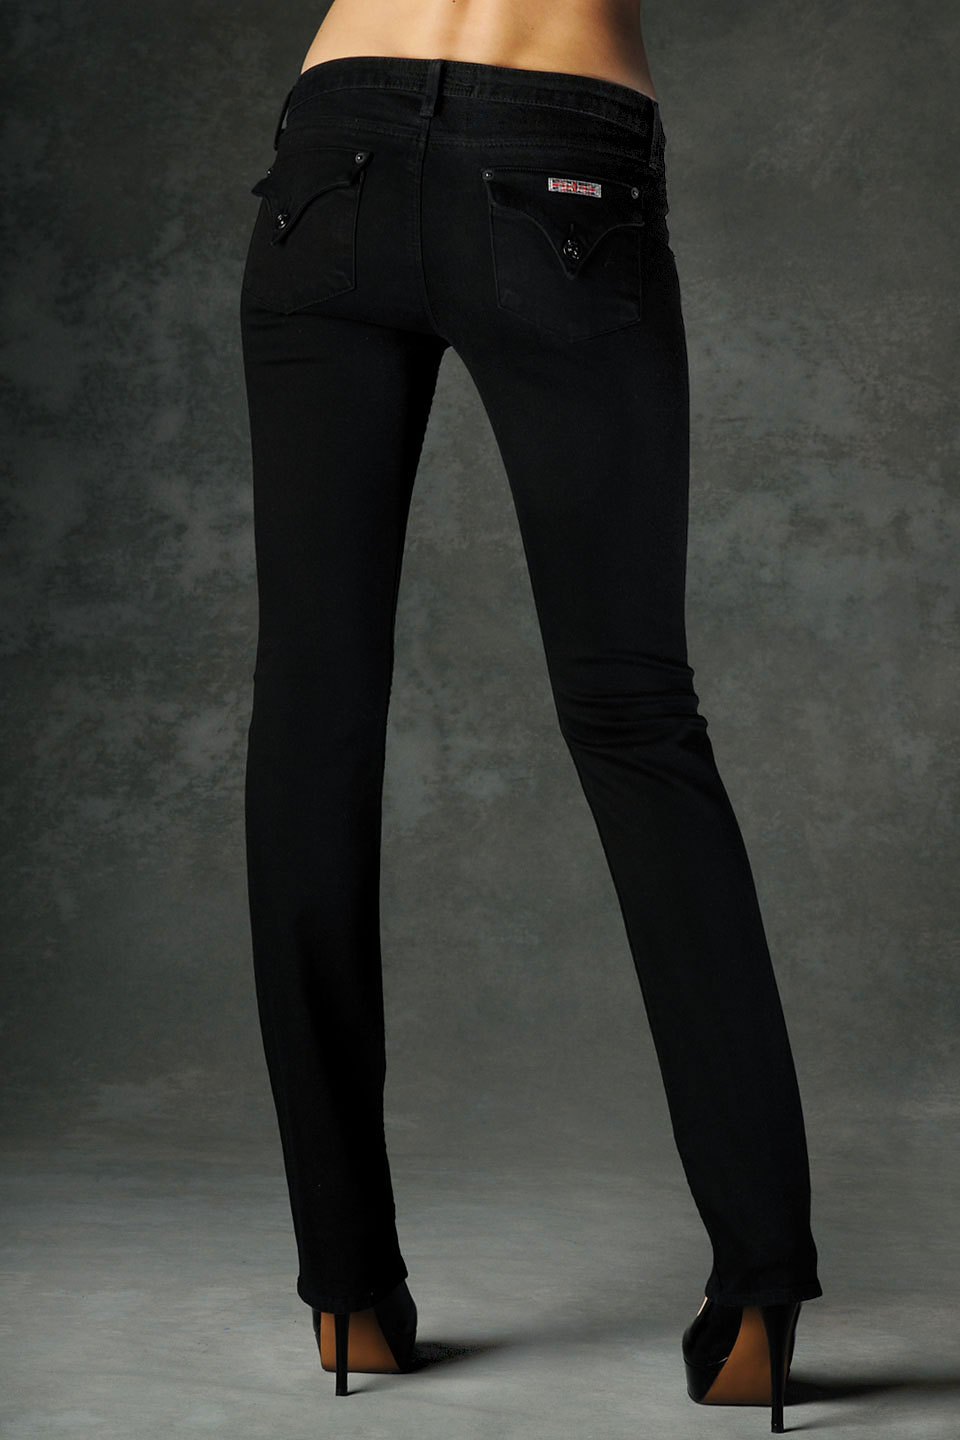 Hudson Jeans Carly Straight Leg in Black - Lyst